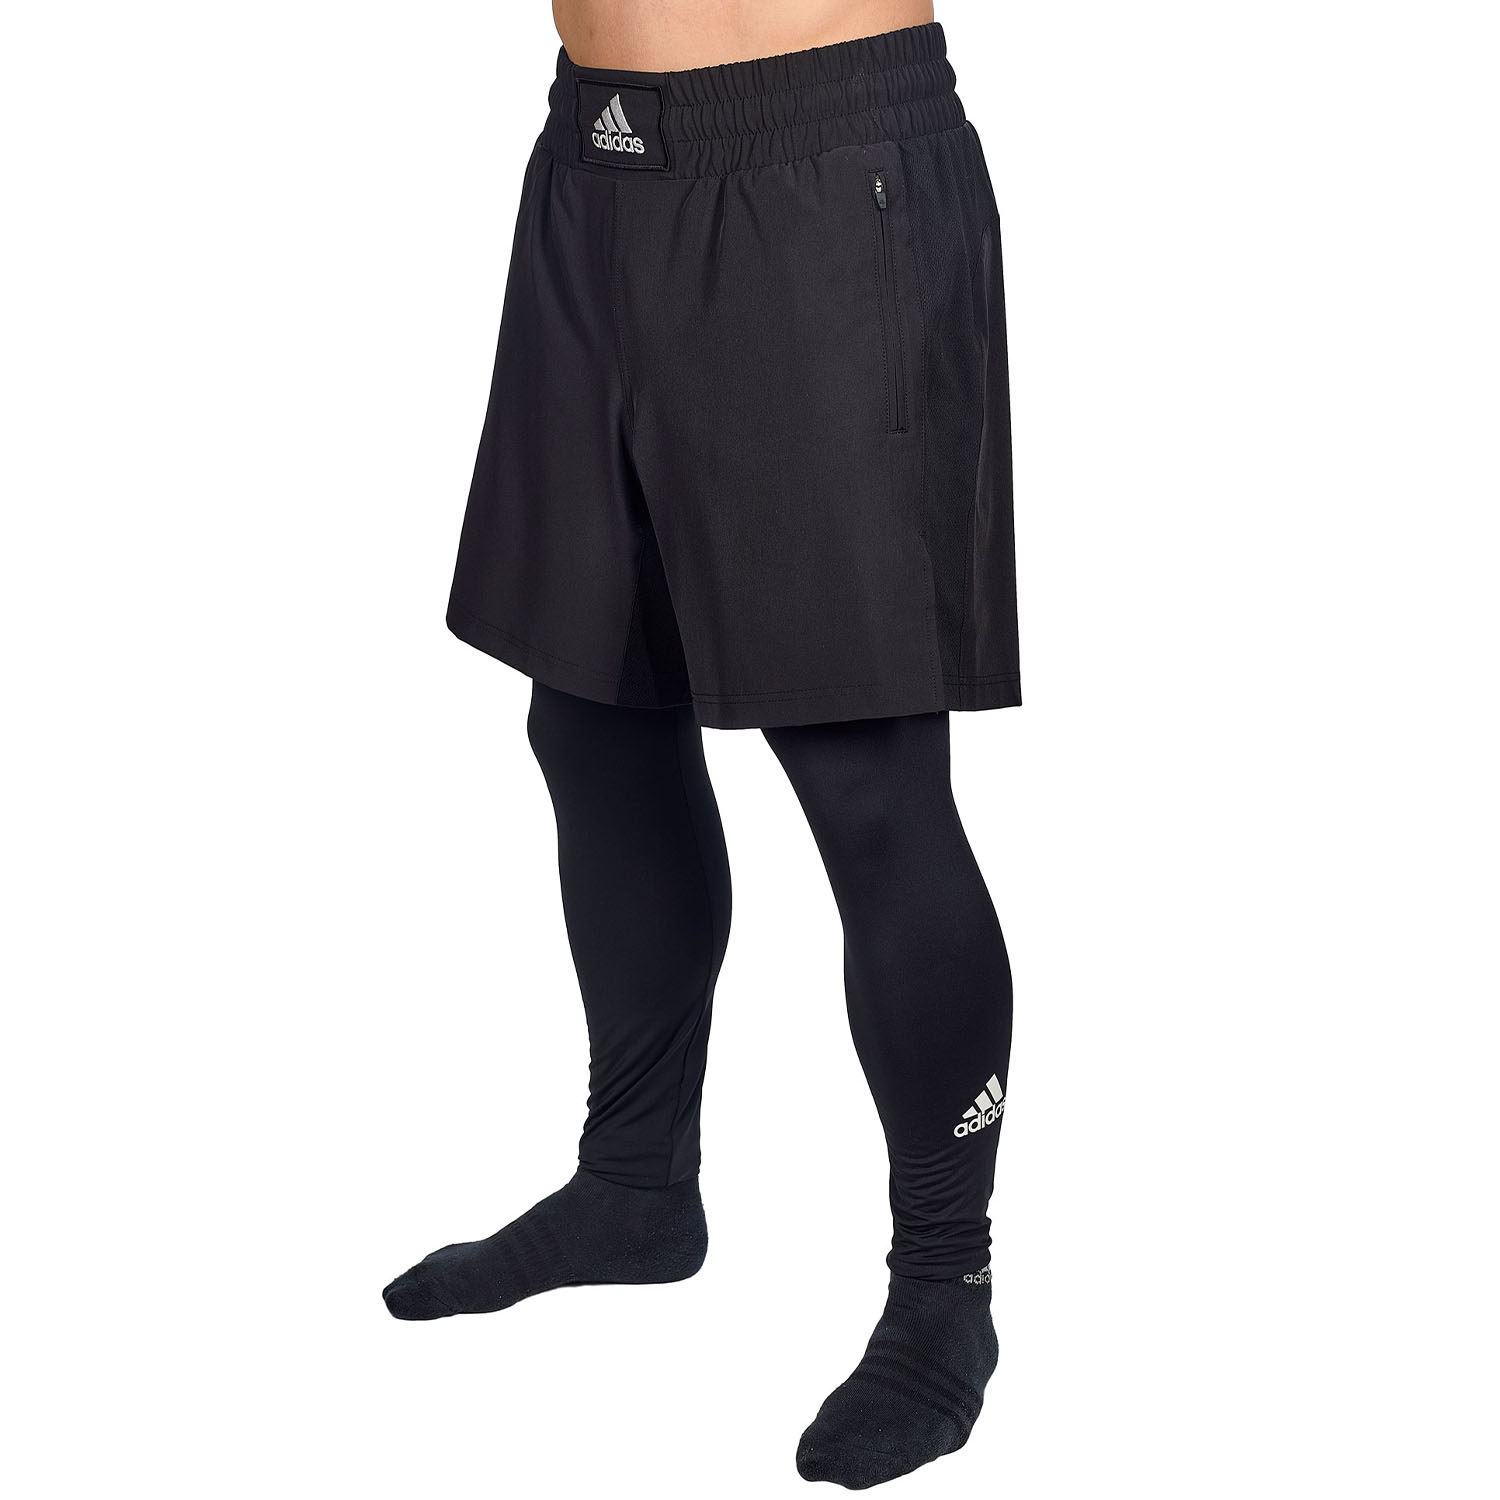 adidas Fitness Shorts, Spats Boxwear Tech, schwarz-weiß, XL